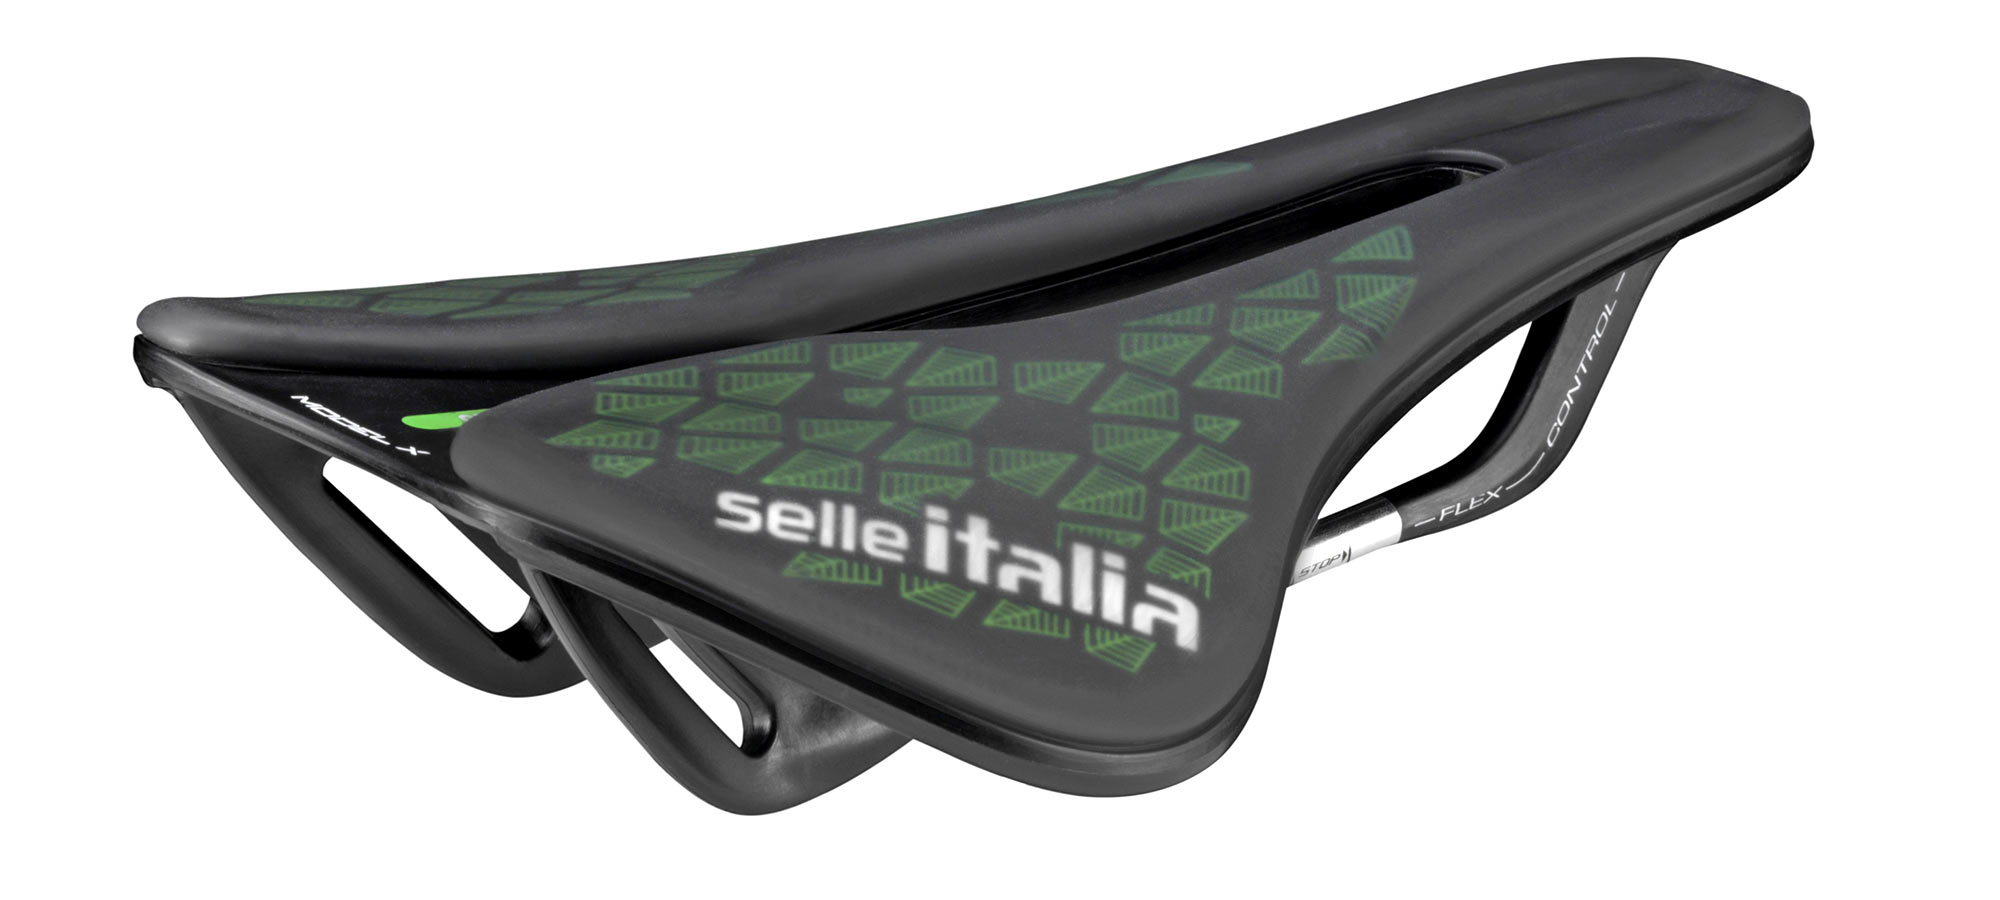 Selle-Italia-Model-X-Leaf-affordable-eco-friendly-sustainable-road-bike-saddle_angled.jpg